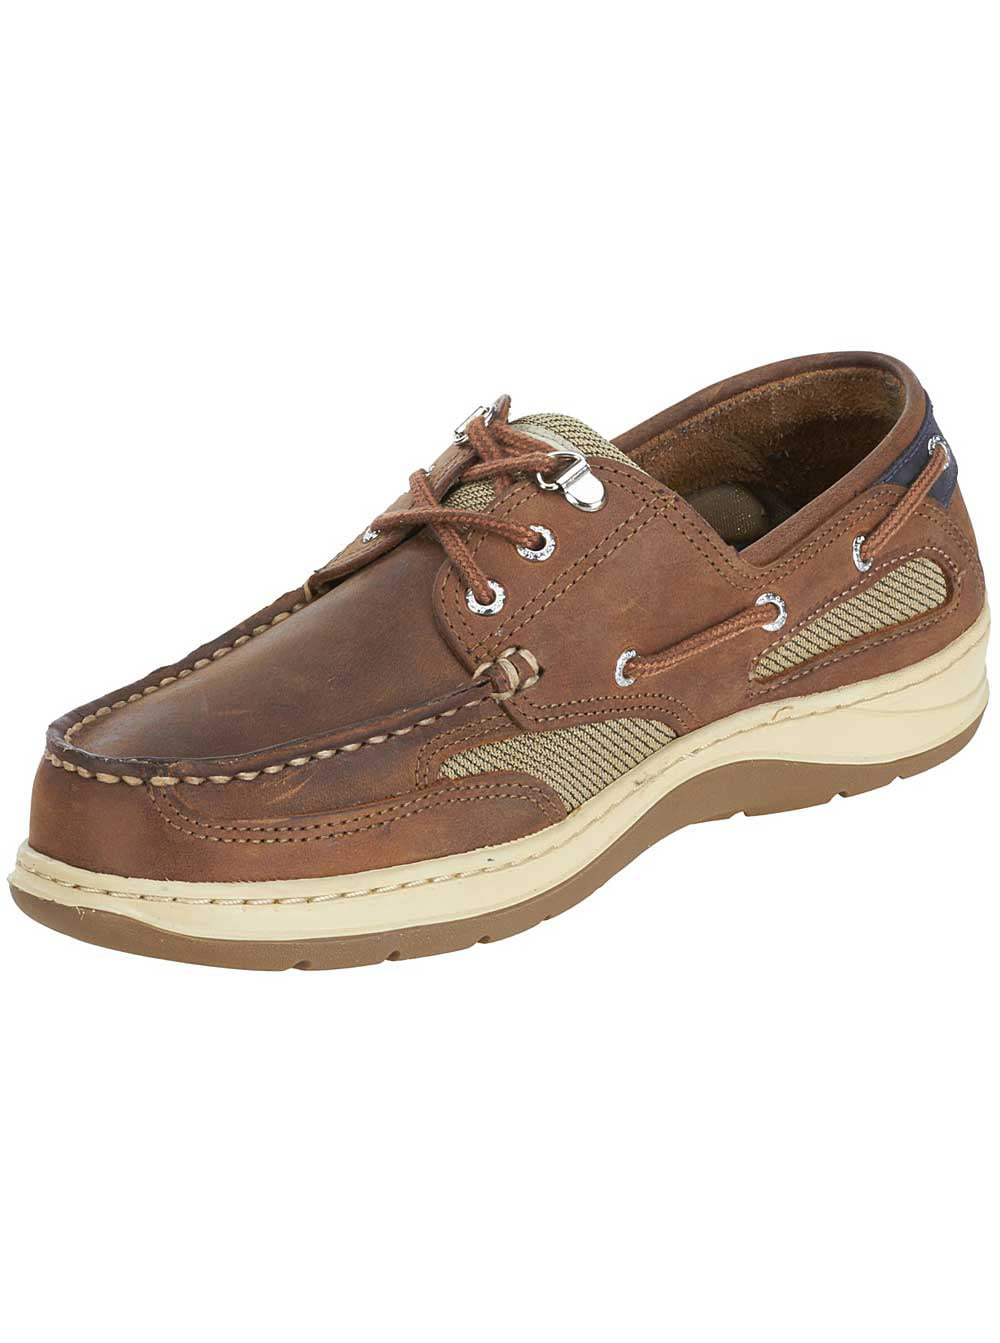 Sebago Mens Clovehitch II Boat Shoes in Walnut - Walmart.com